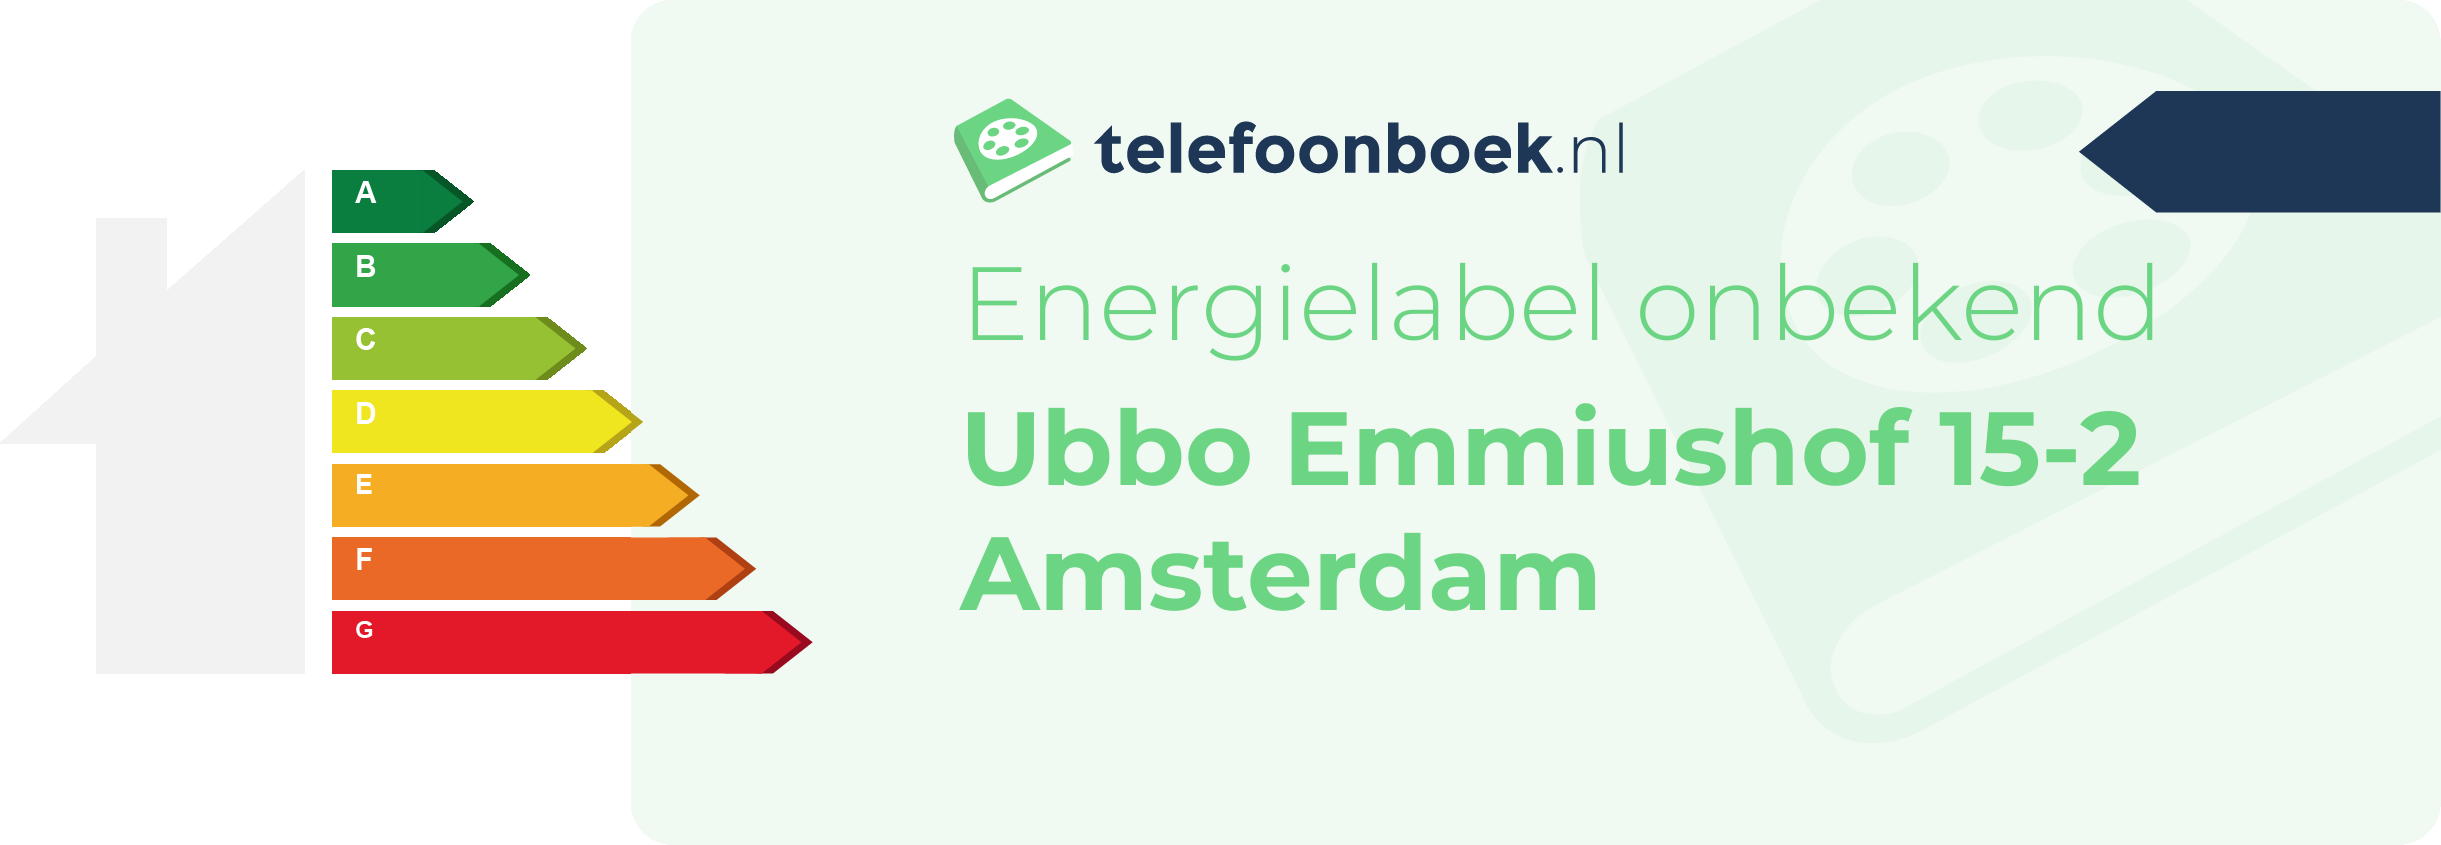 Energielabel Ubbo Emmiushof 15-2 Amsterdam